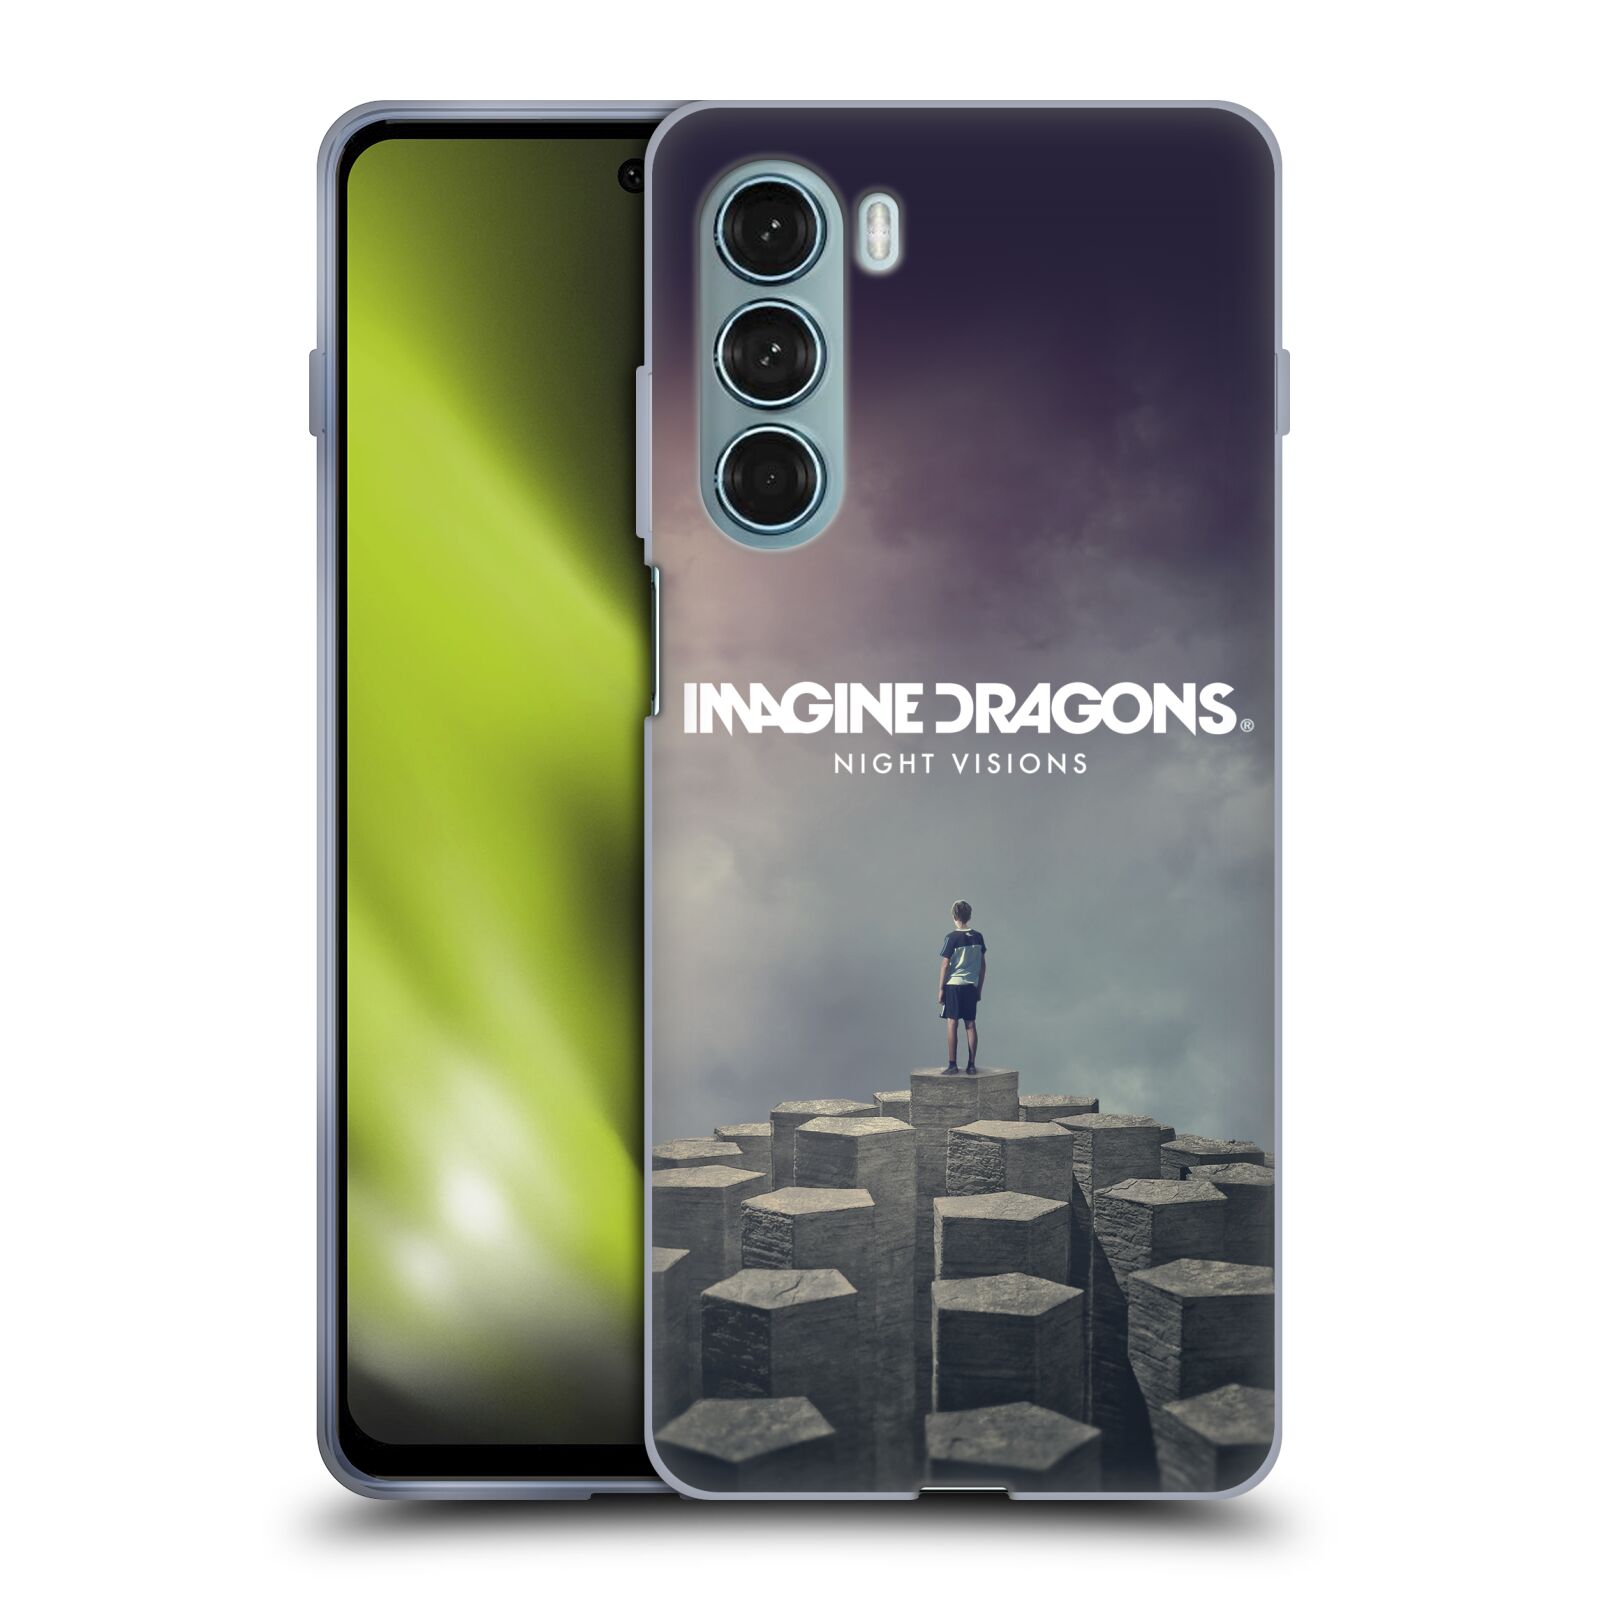 Silikonové pouzdro na mobil Motorola Moto G200 5G - Imagine Dragons - Night Visions